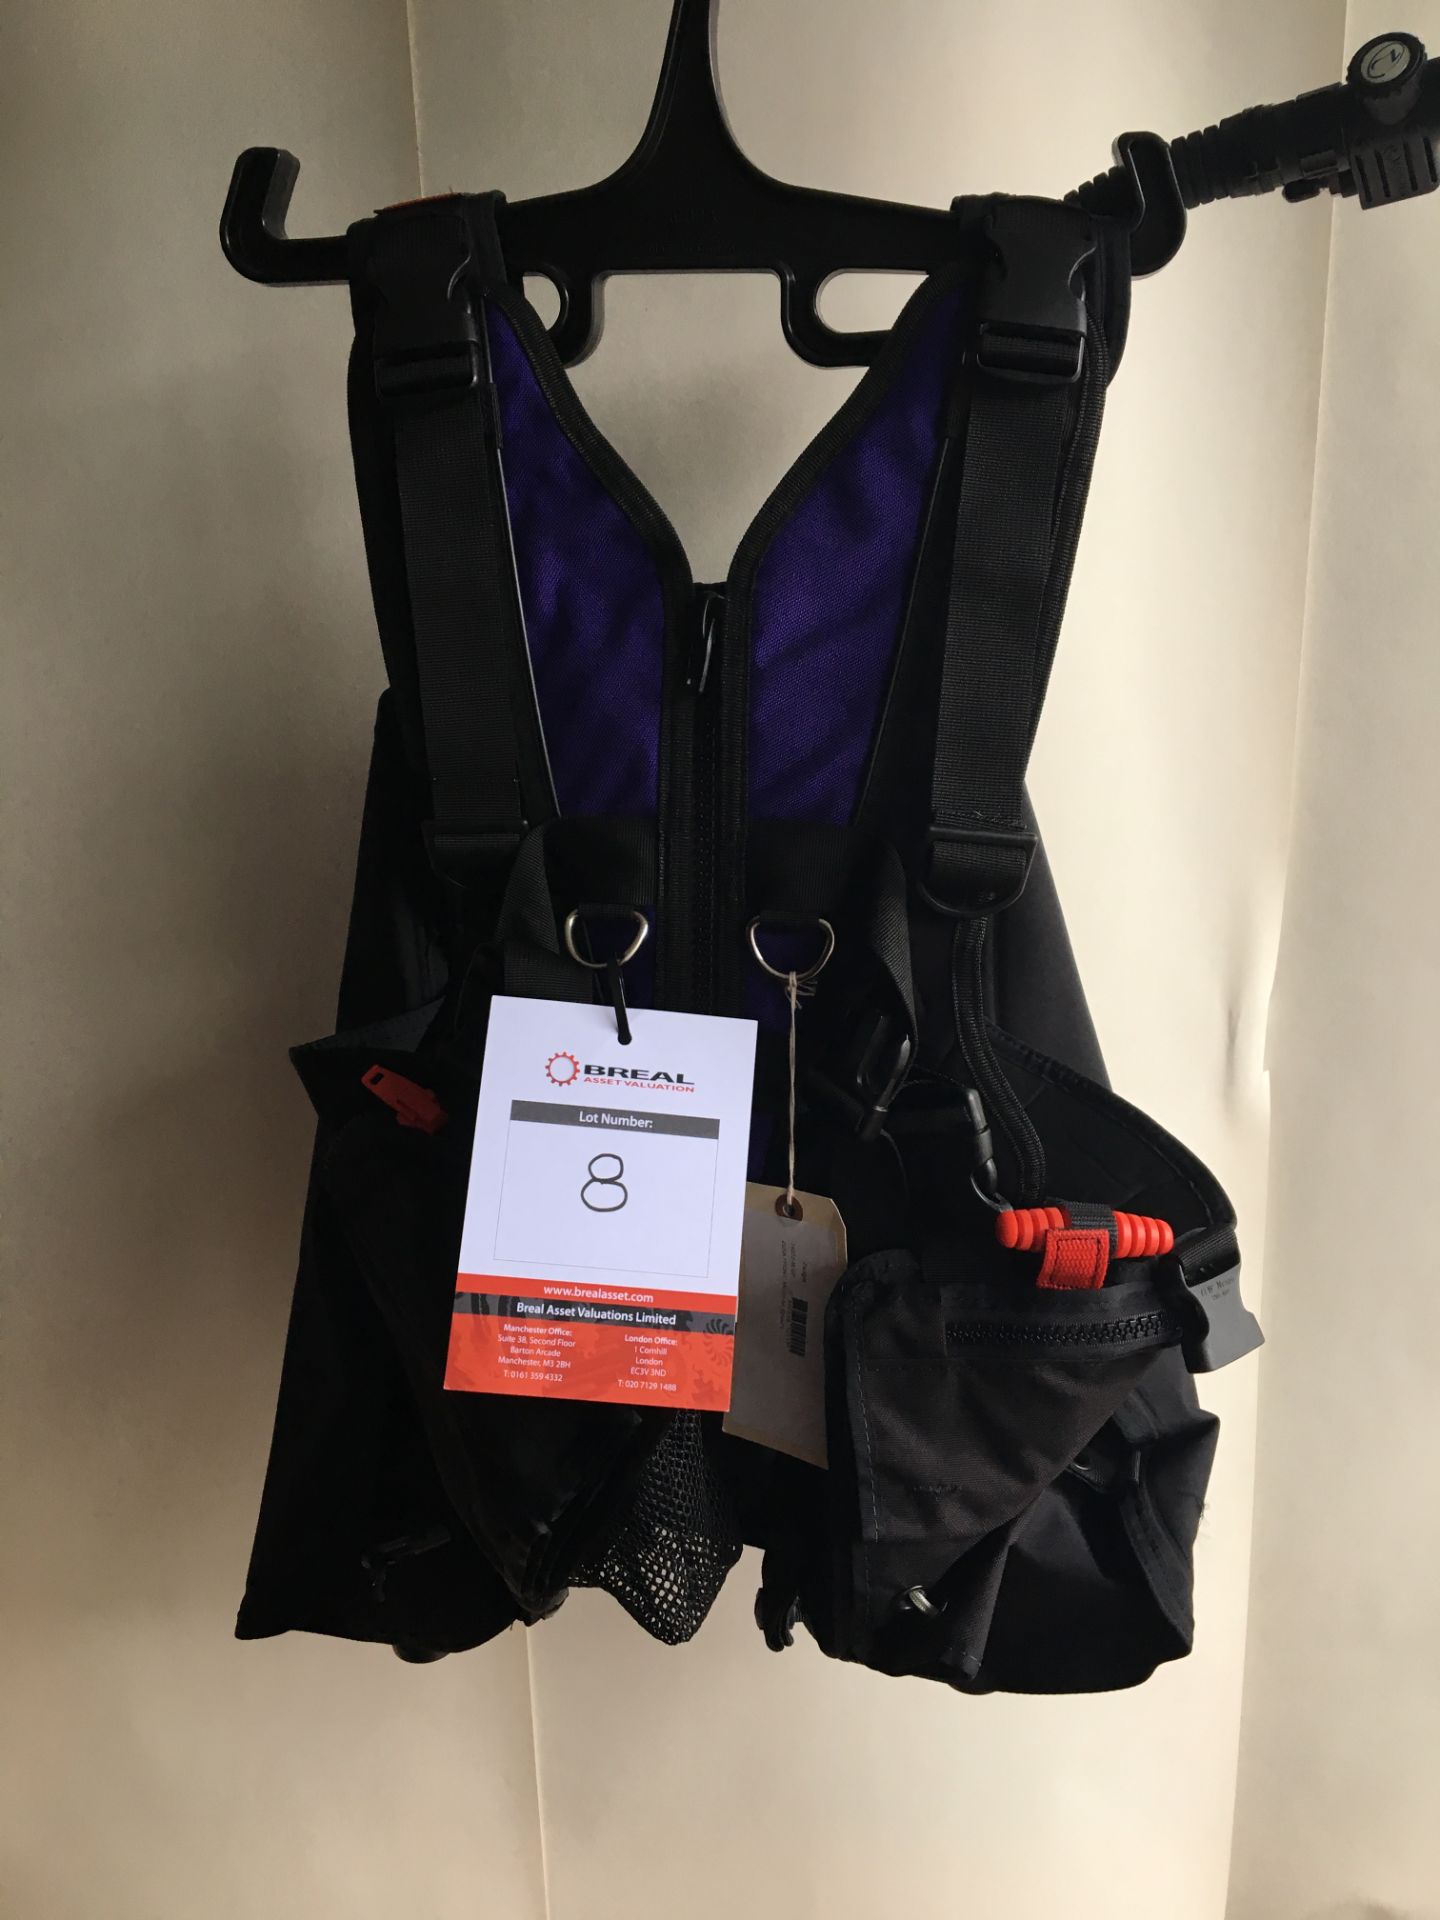 Zeagle Zena BCD Dive Vest in grape, size M (as new)